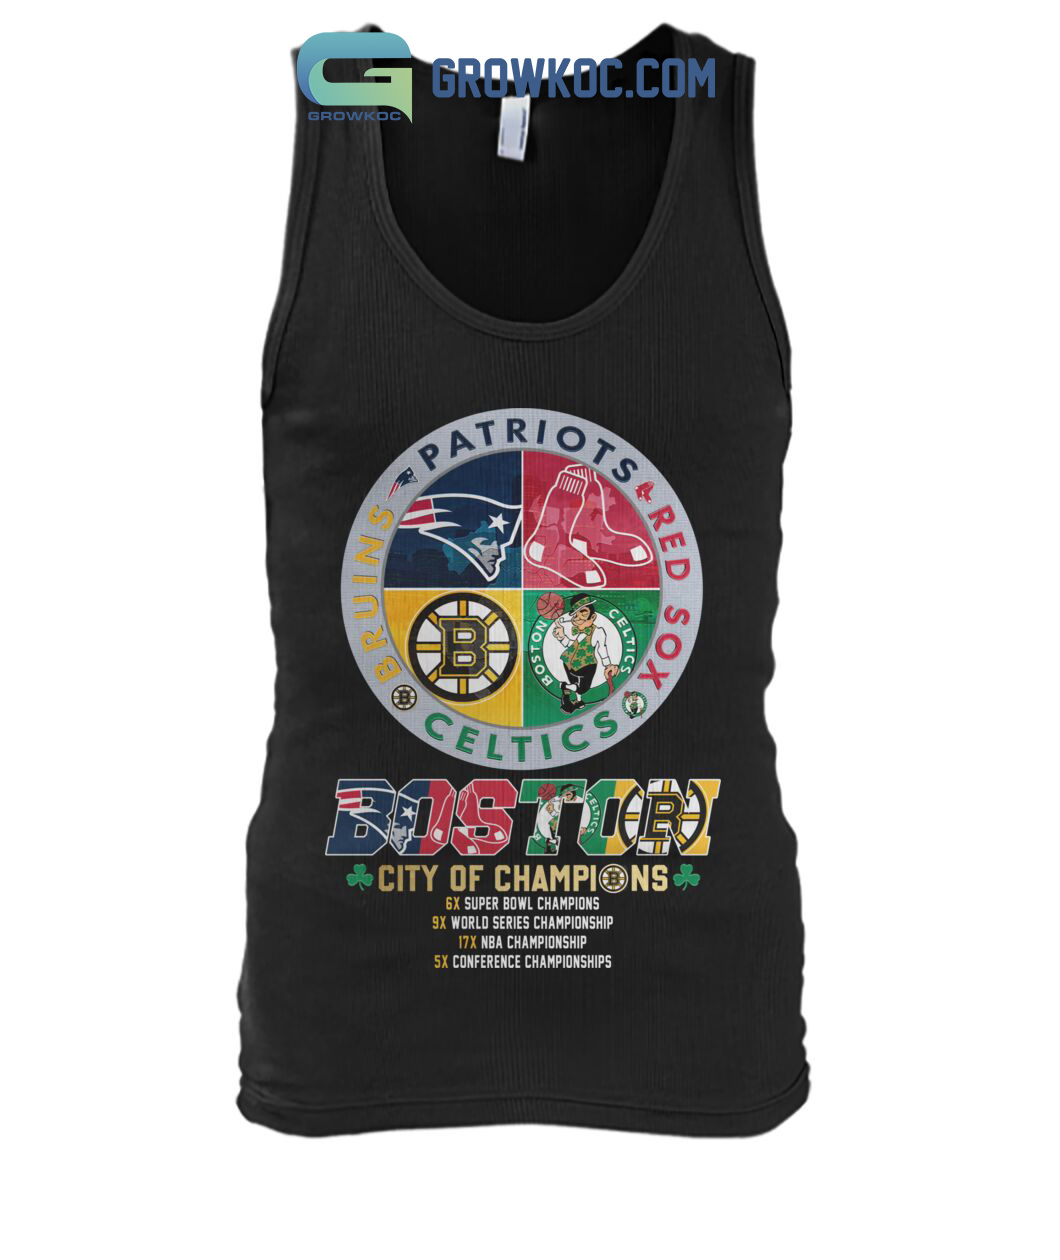 Boston City Of Champions Boston Red Sox Patriots Bruins Celtics 2023 Shirt